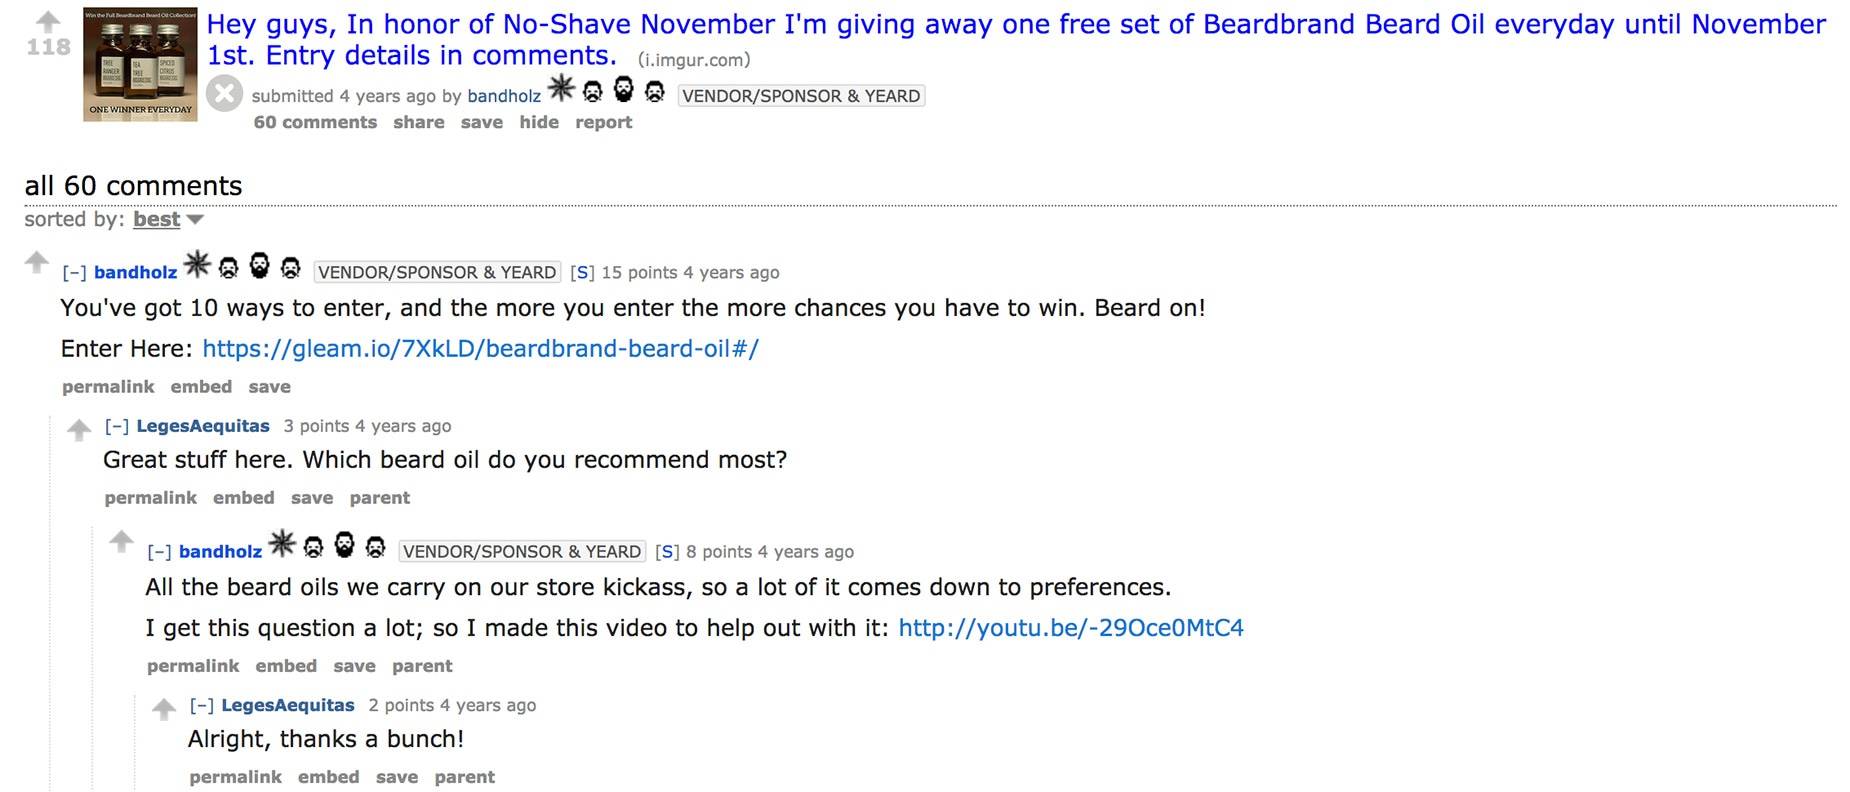 Beardbrand promoting their campaign on Reddit